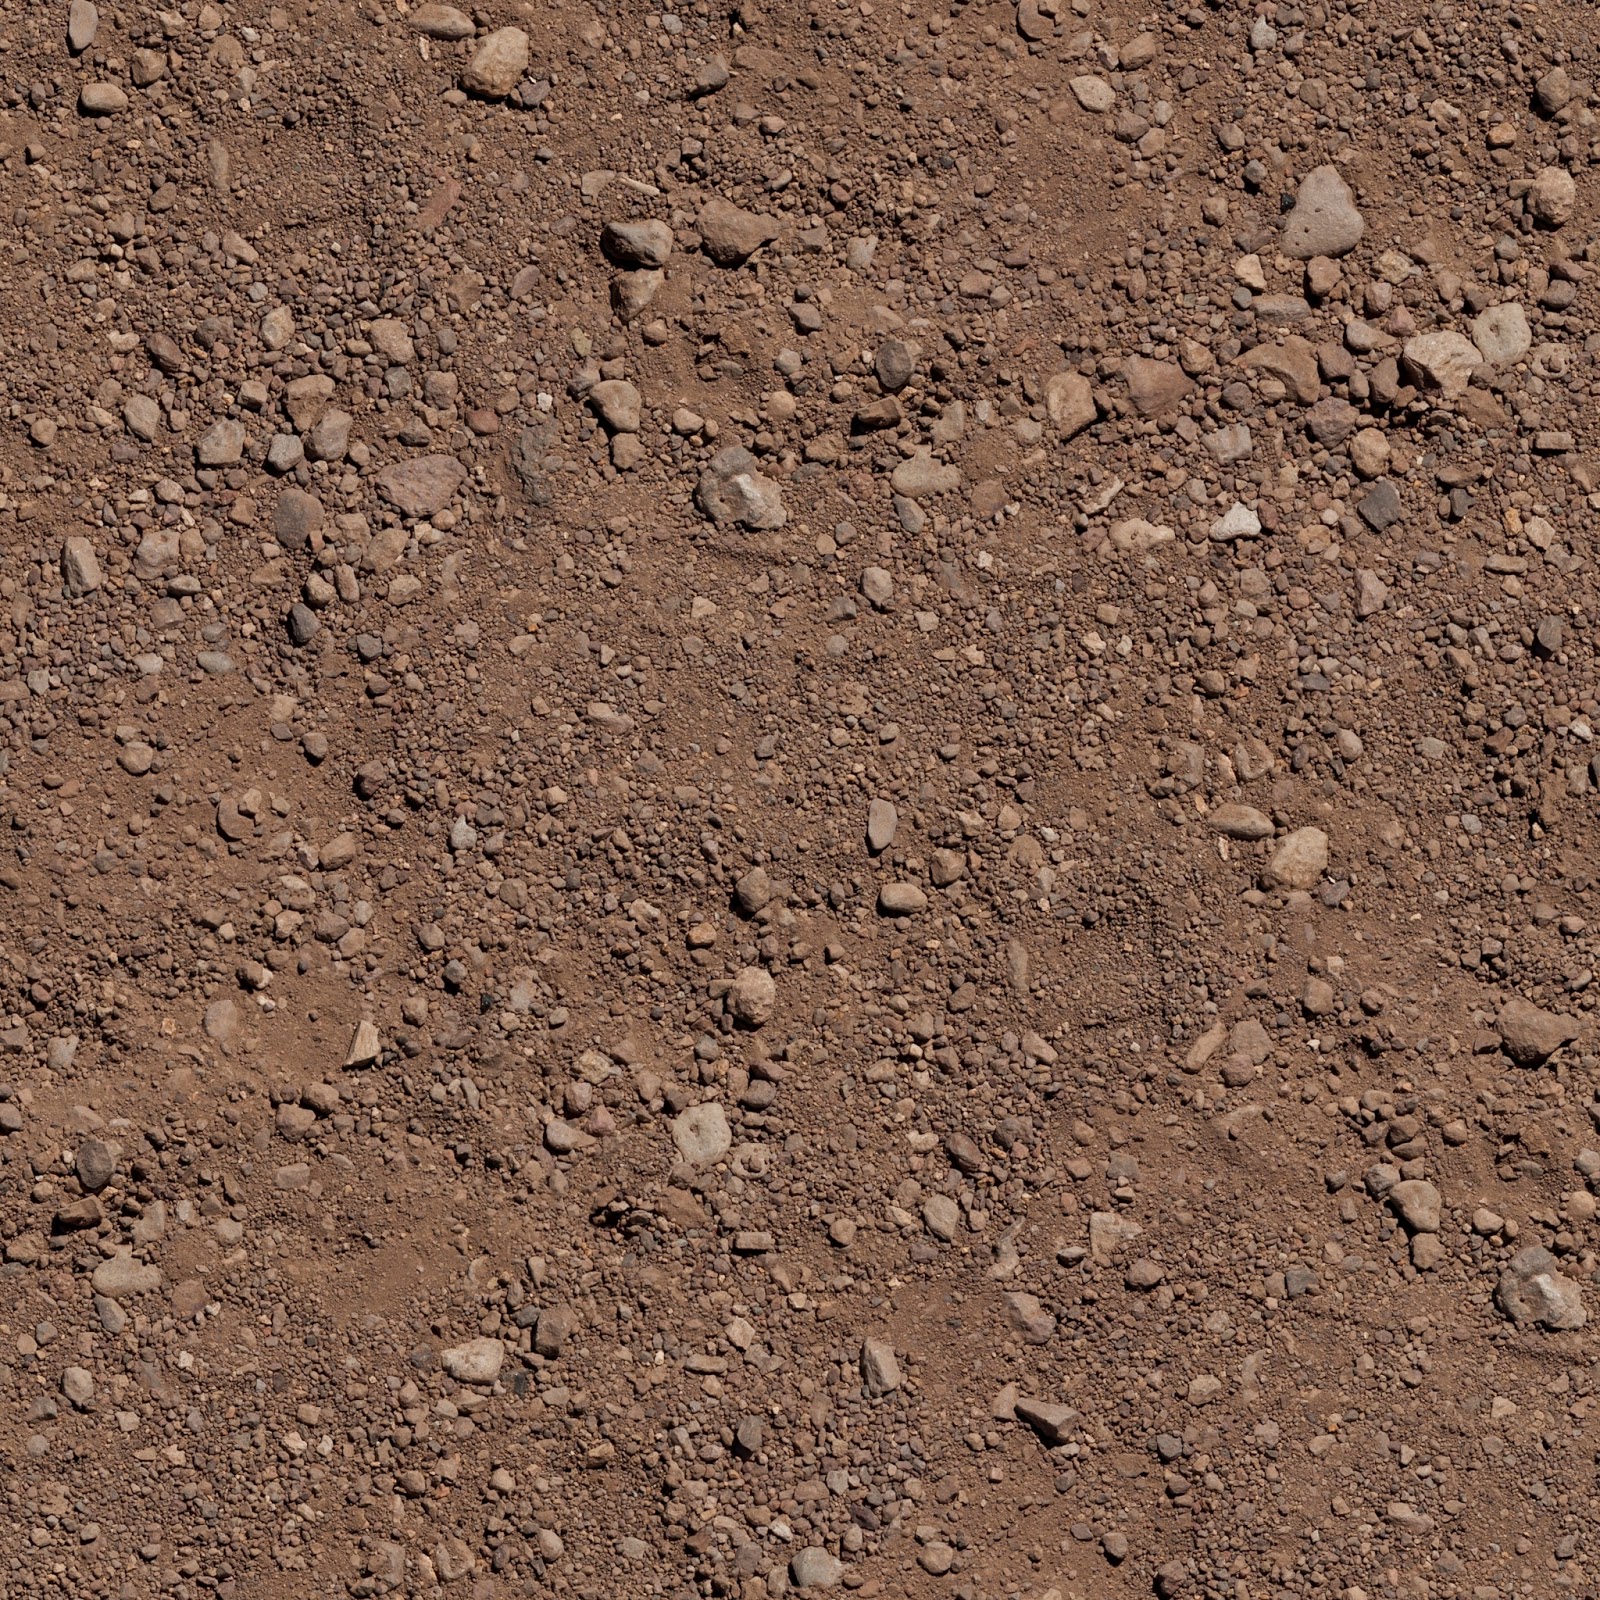 HIGH RESOLUTION TEXTURES: Stoney dirt ground texture